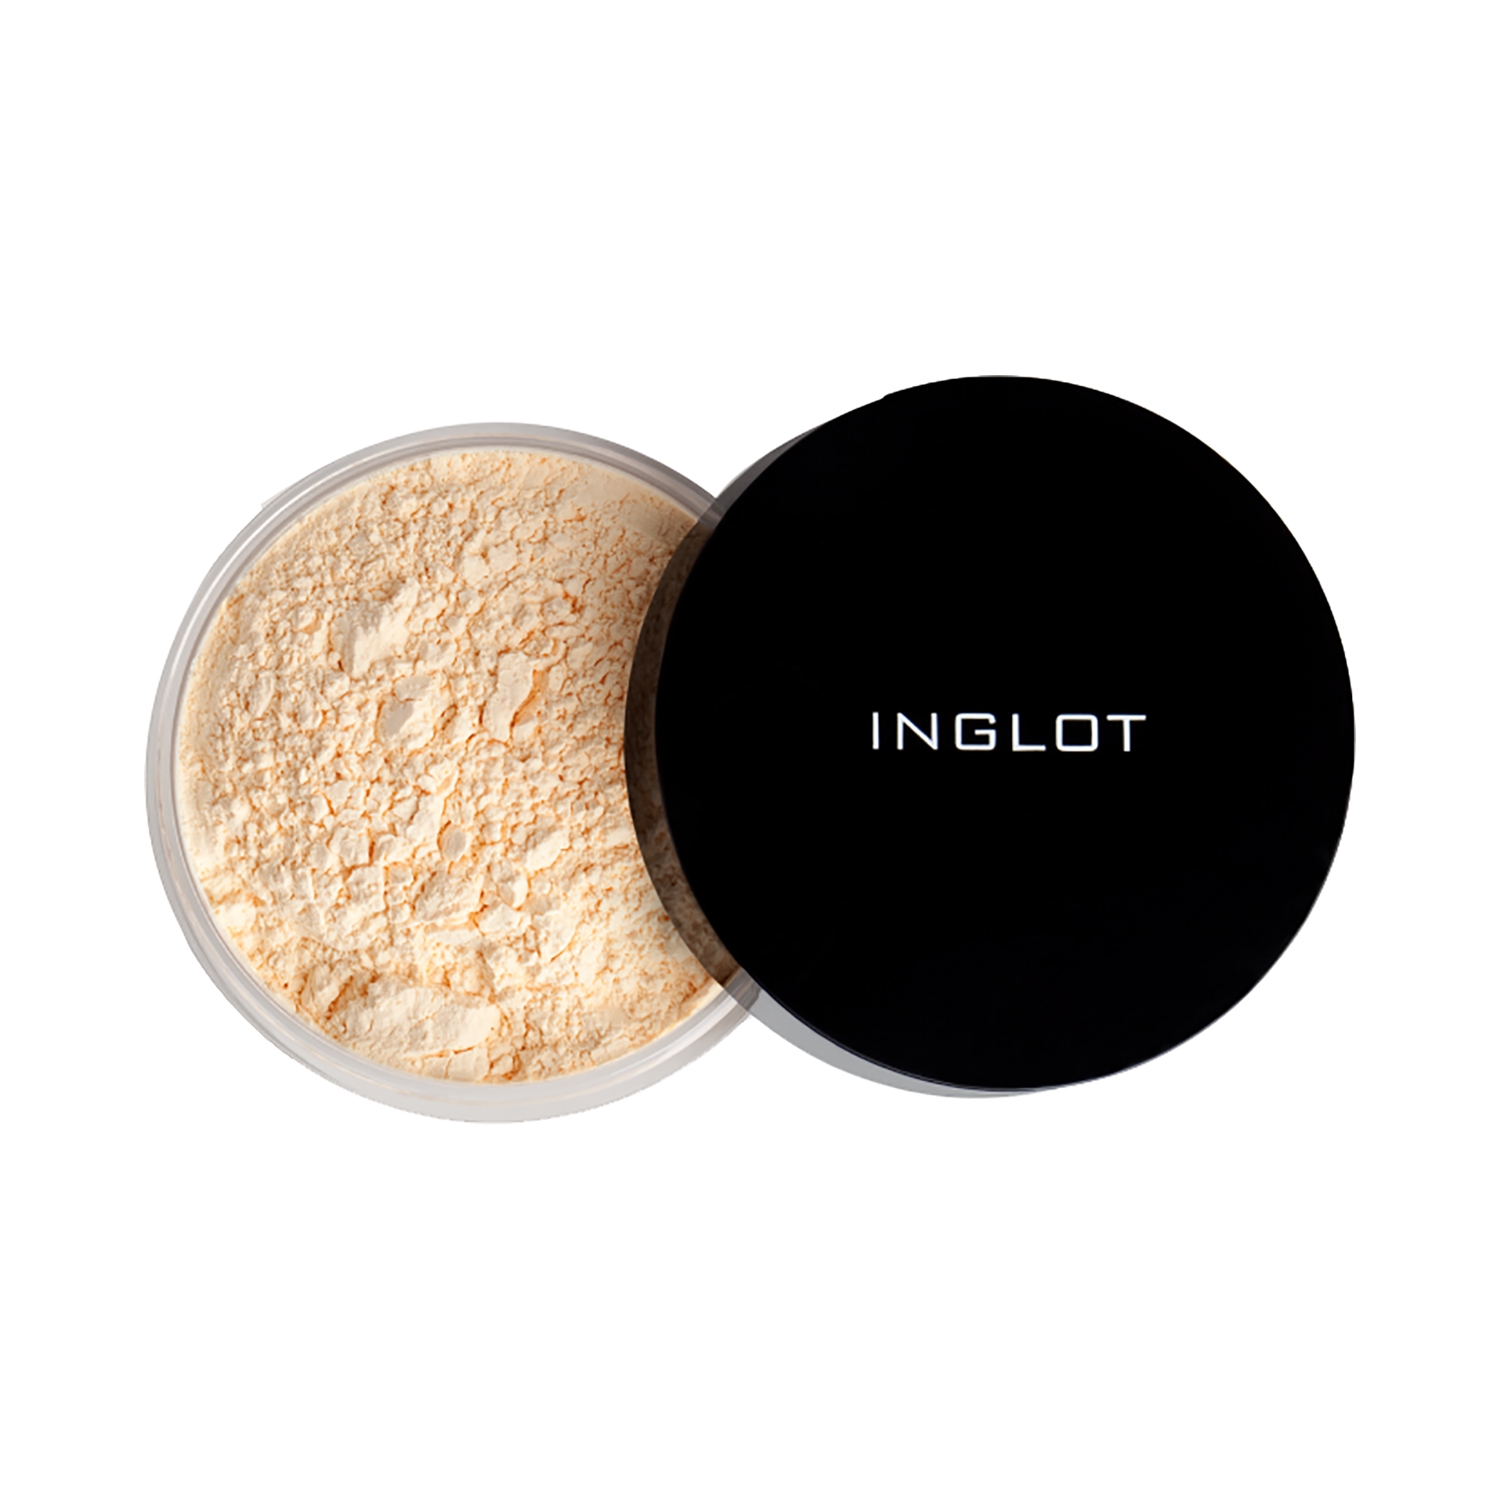 INGLOT | INGLOT Hd Illuminizing Loose Powder - NF 43 (4.5g)